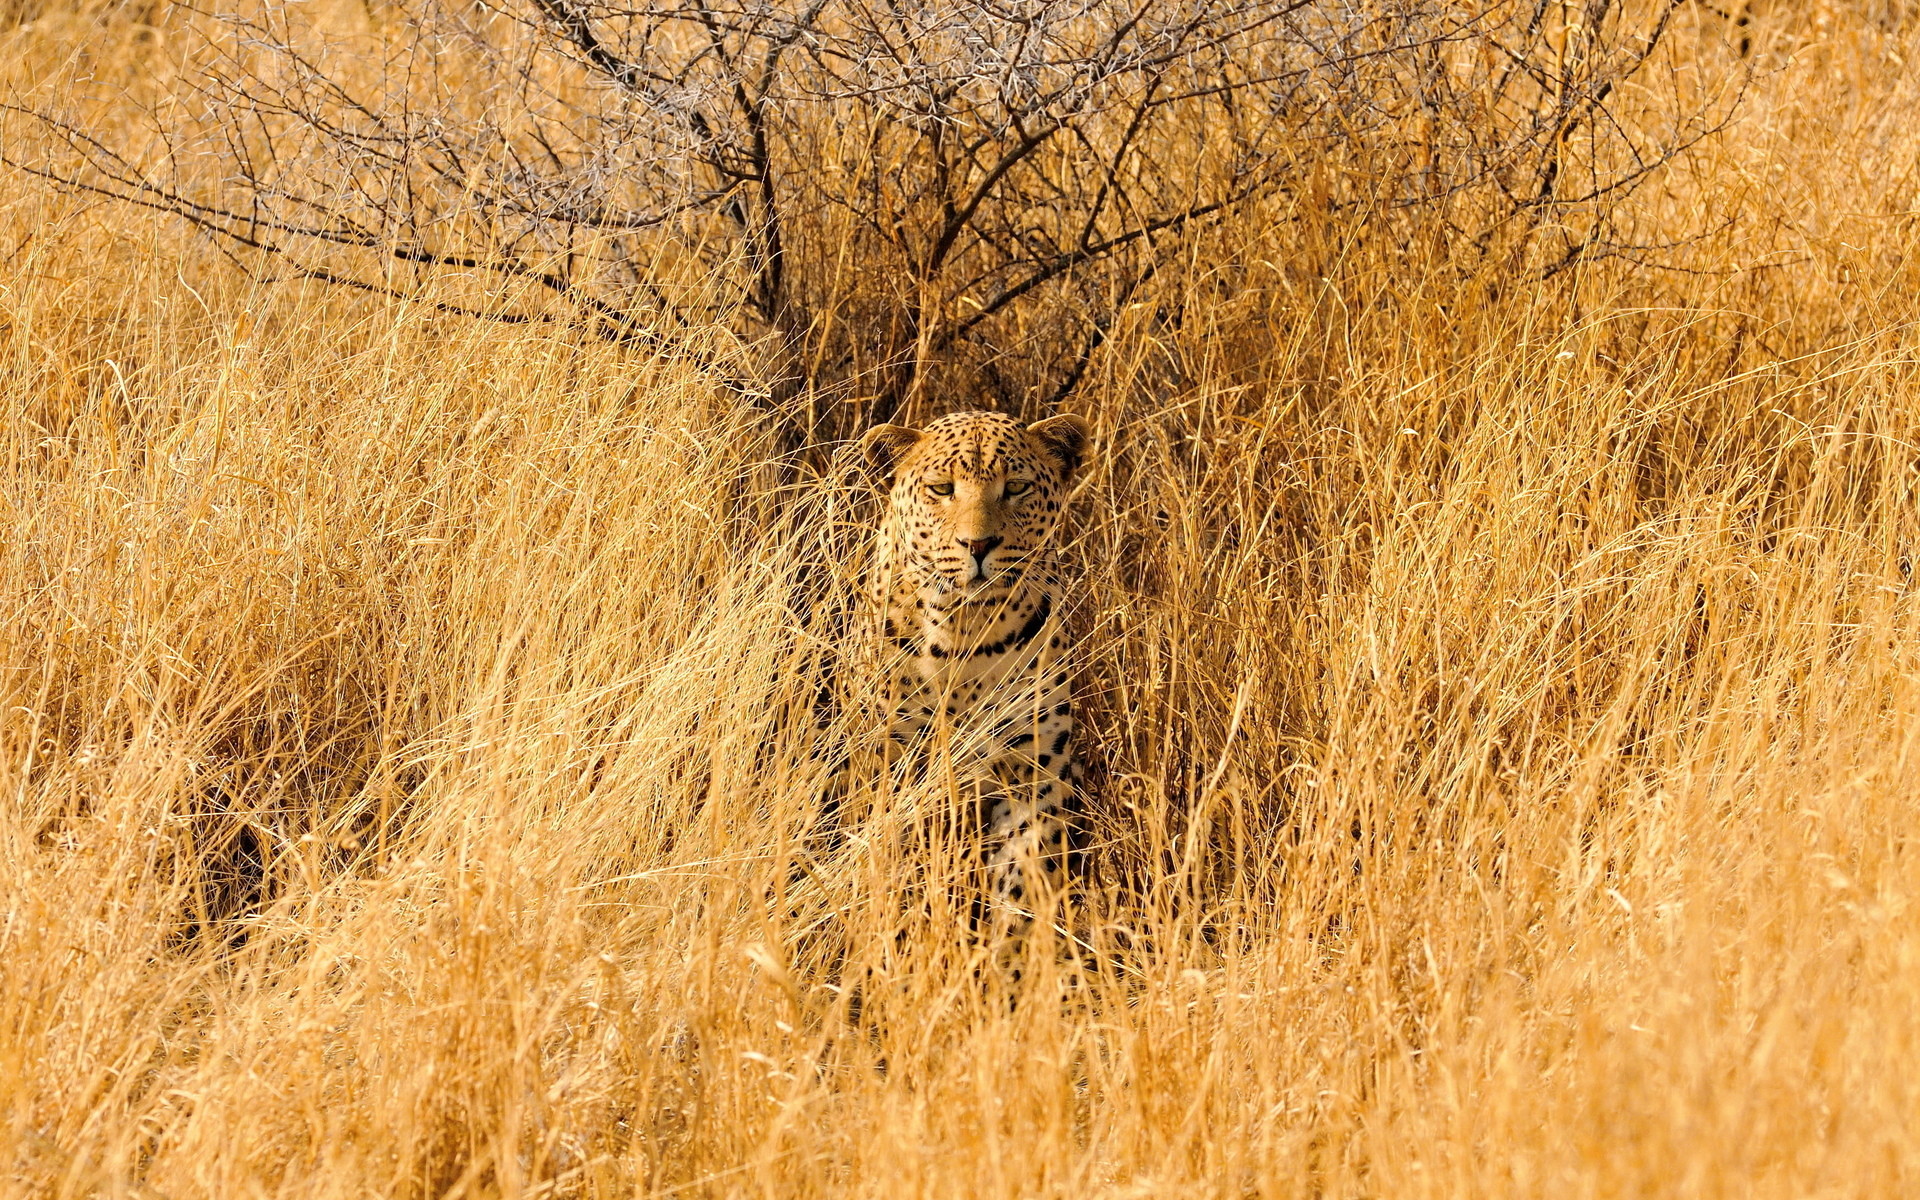 Leopard savannah animals cats wildlife predator africa grass landscapes camo spots fields wallpaper